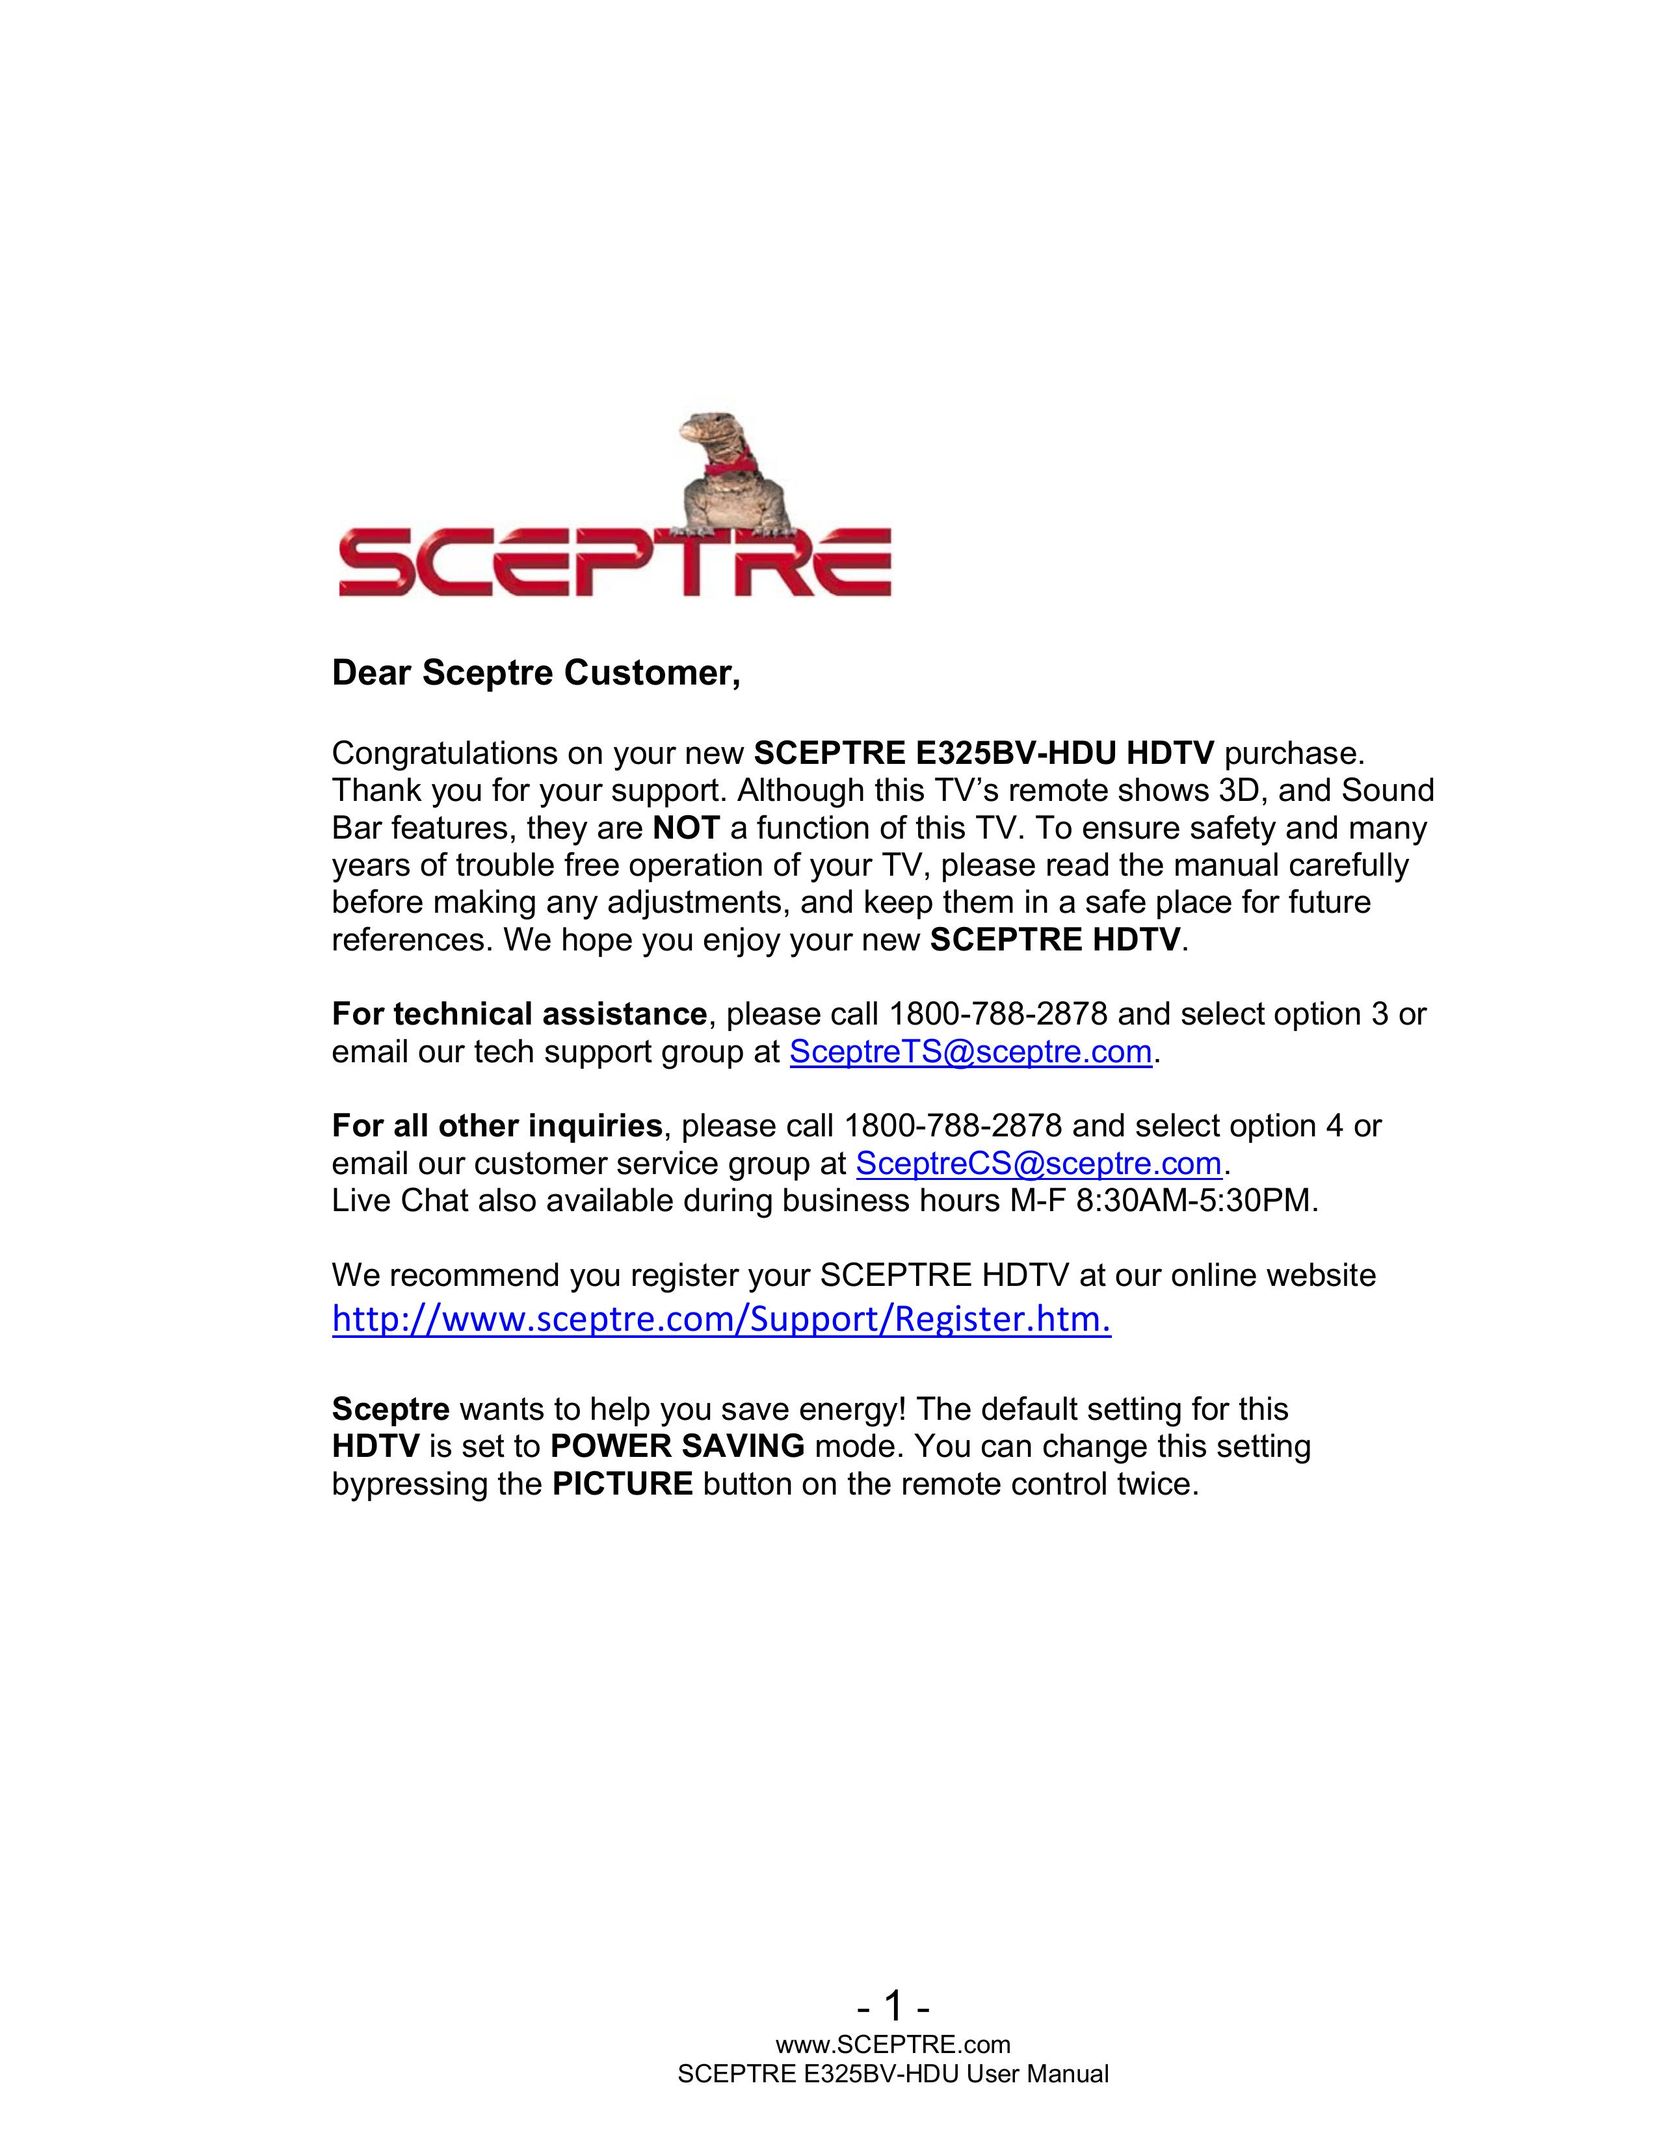 Sceptre Technologies SCEPTRE HDTV Flat Panel Television User Manual